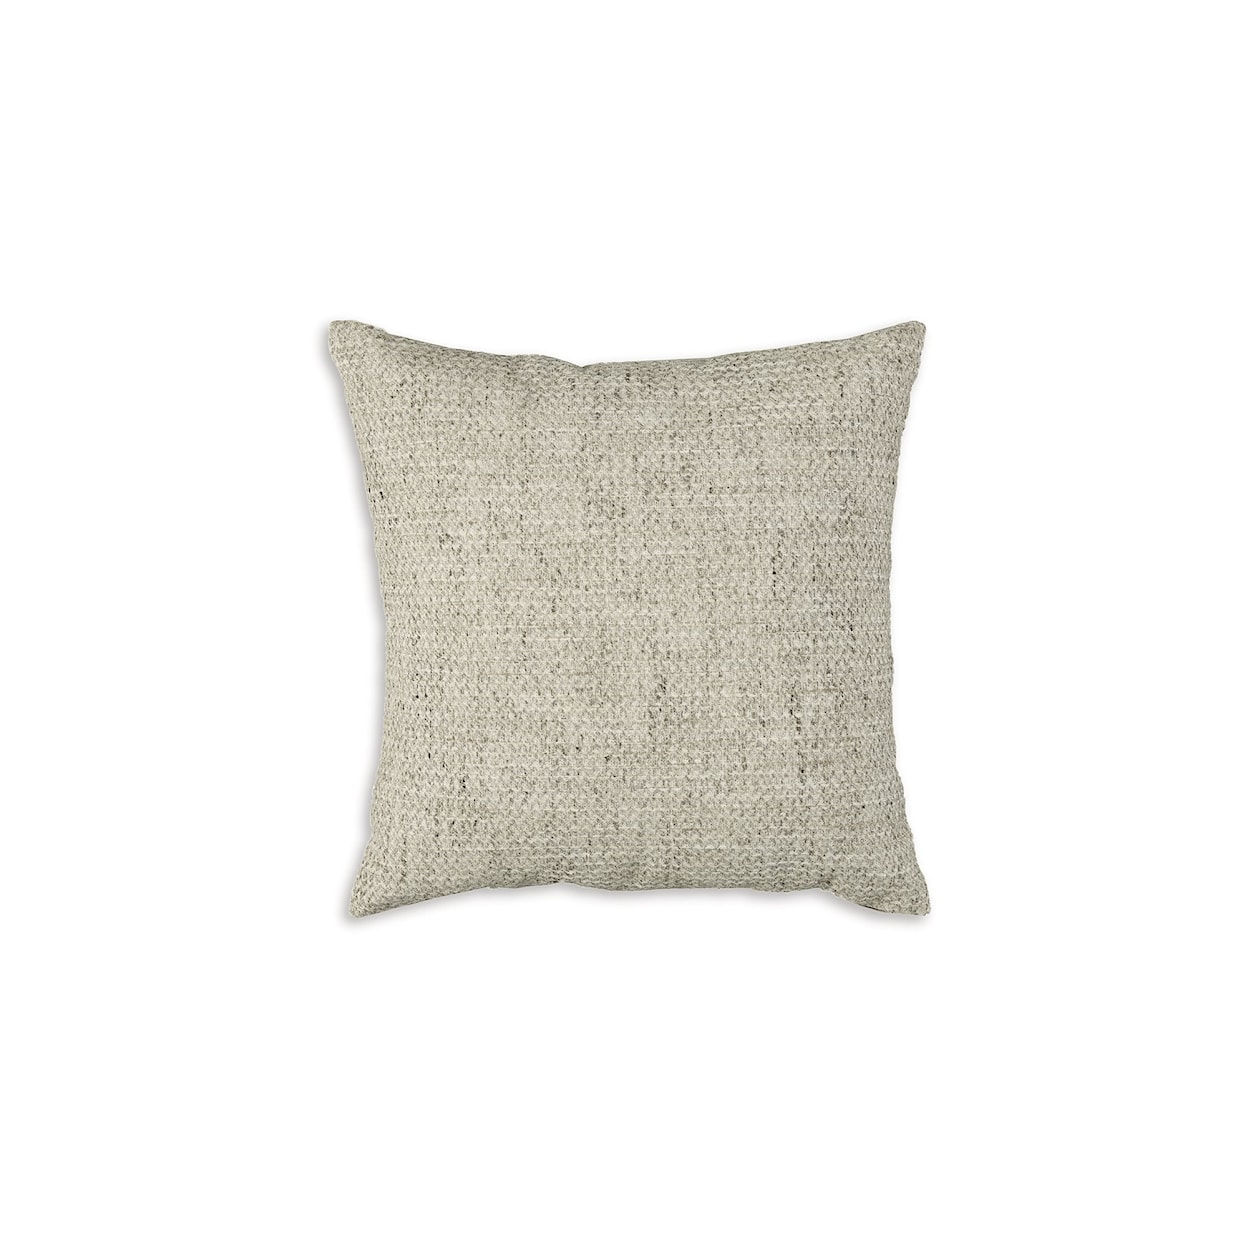 Ashley Furniture Signature Design Erline Pillow (Set of 4)